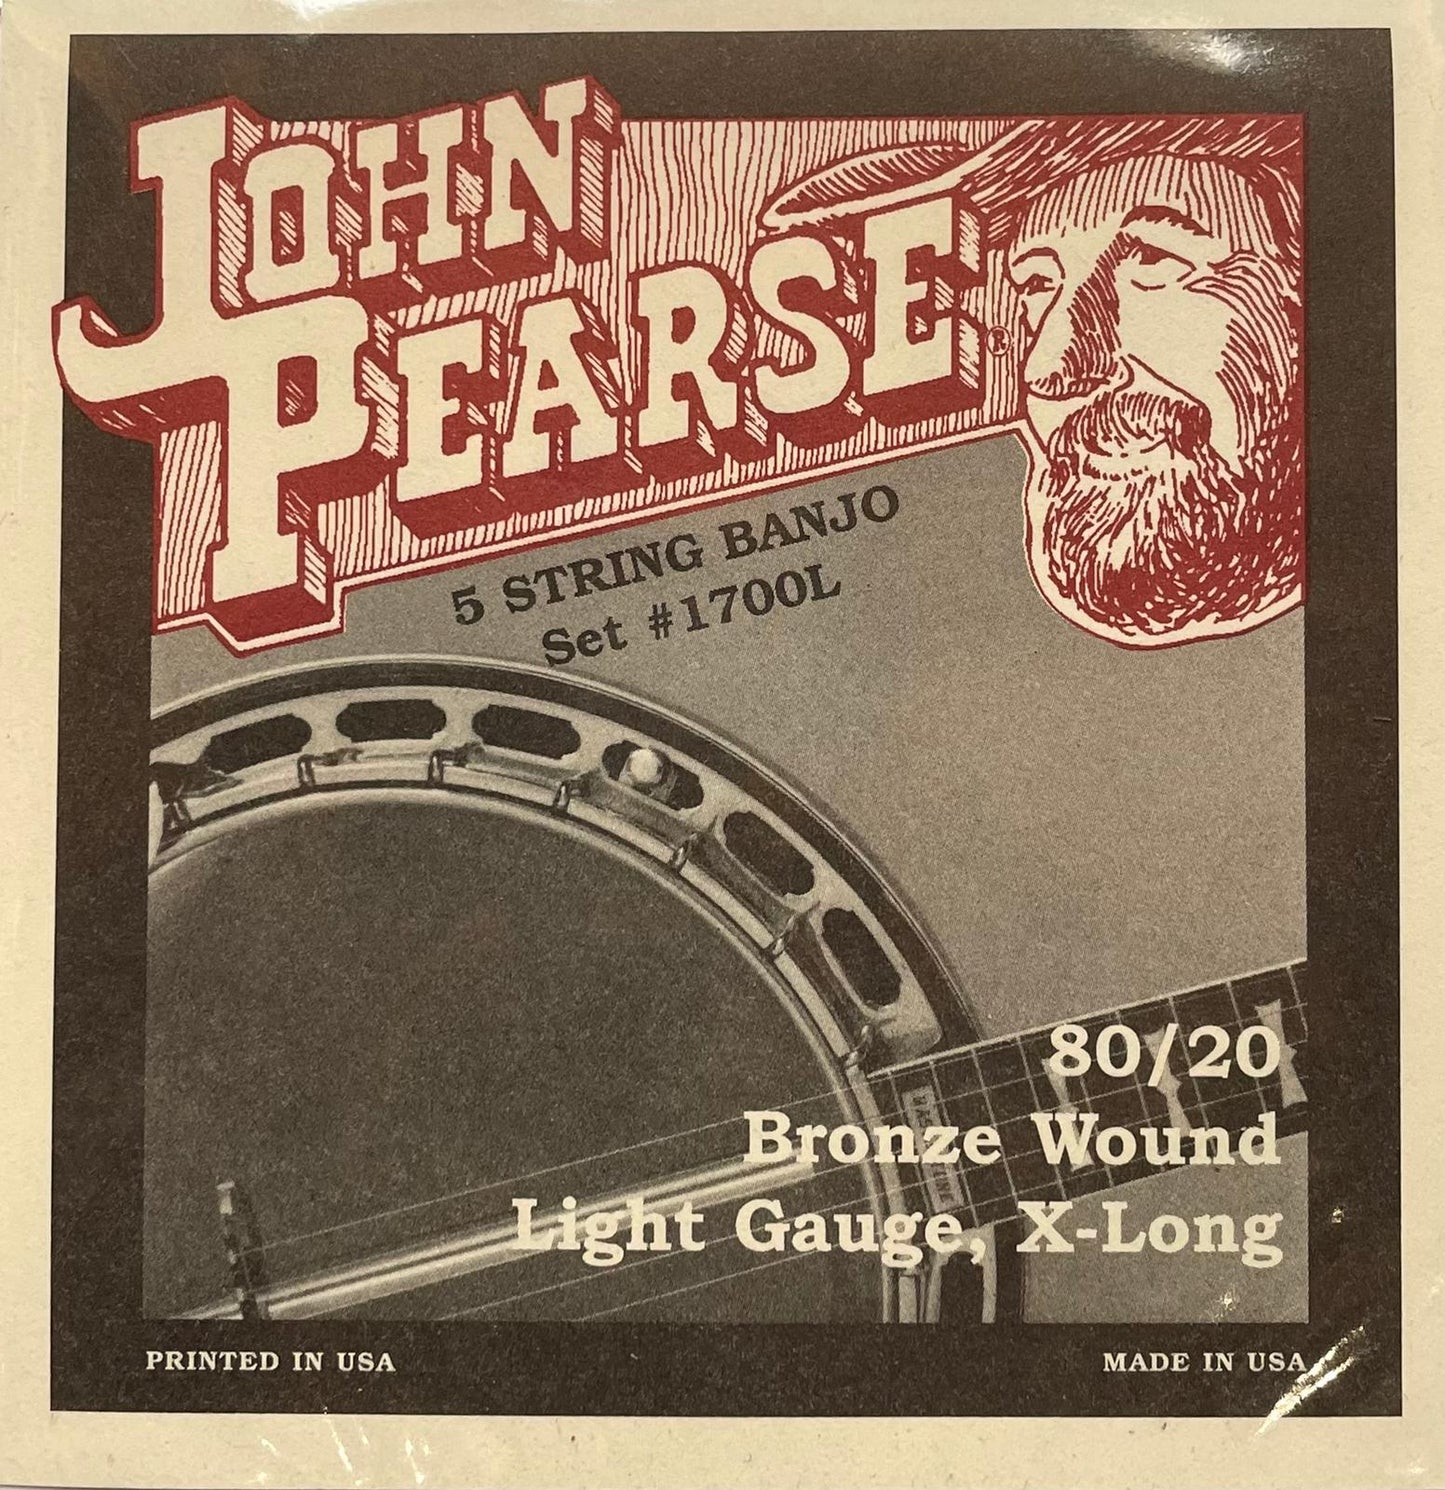 John Pearse 5 String Banjo Set #1700L